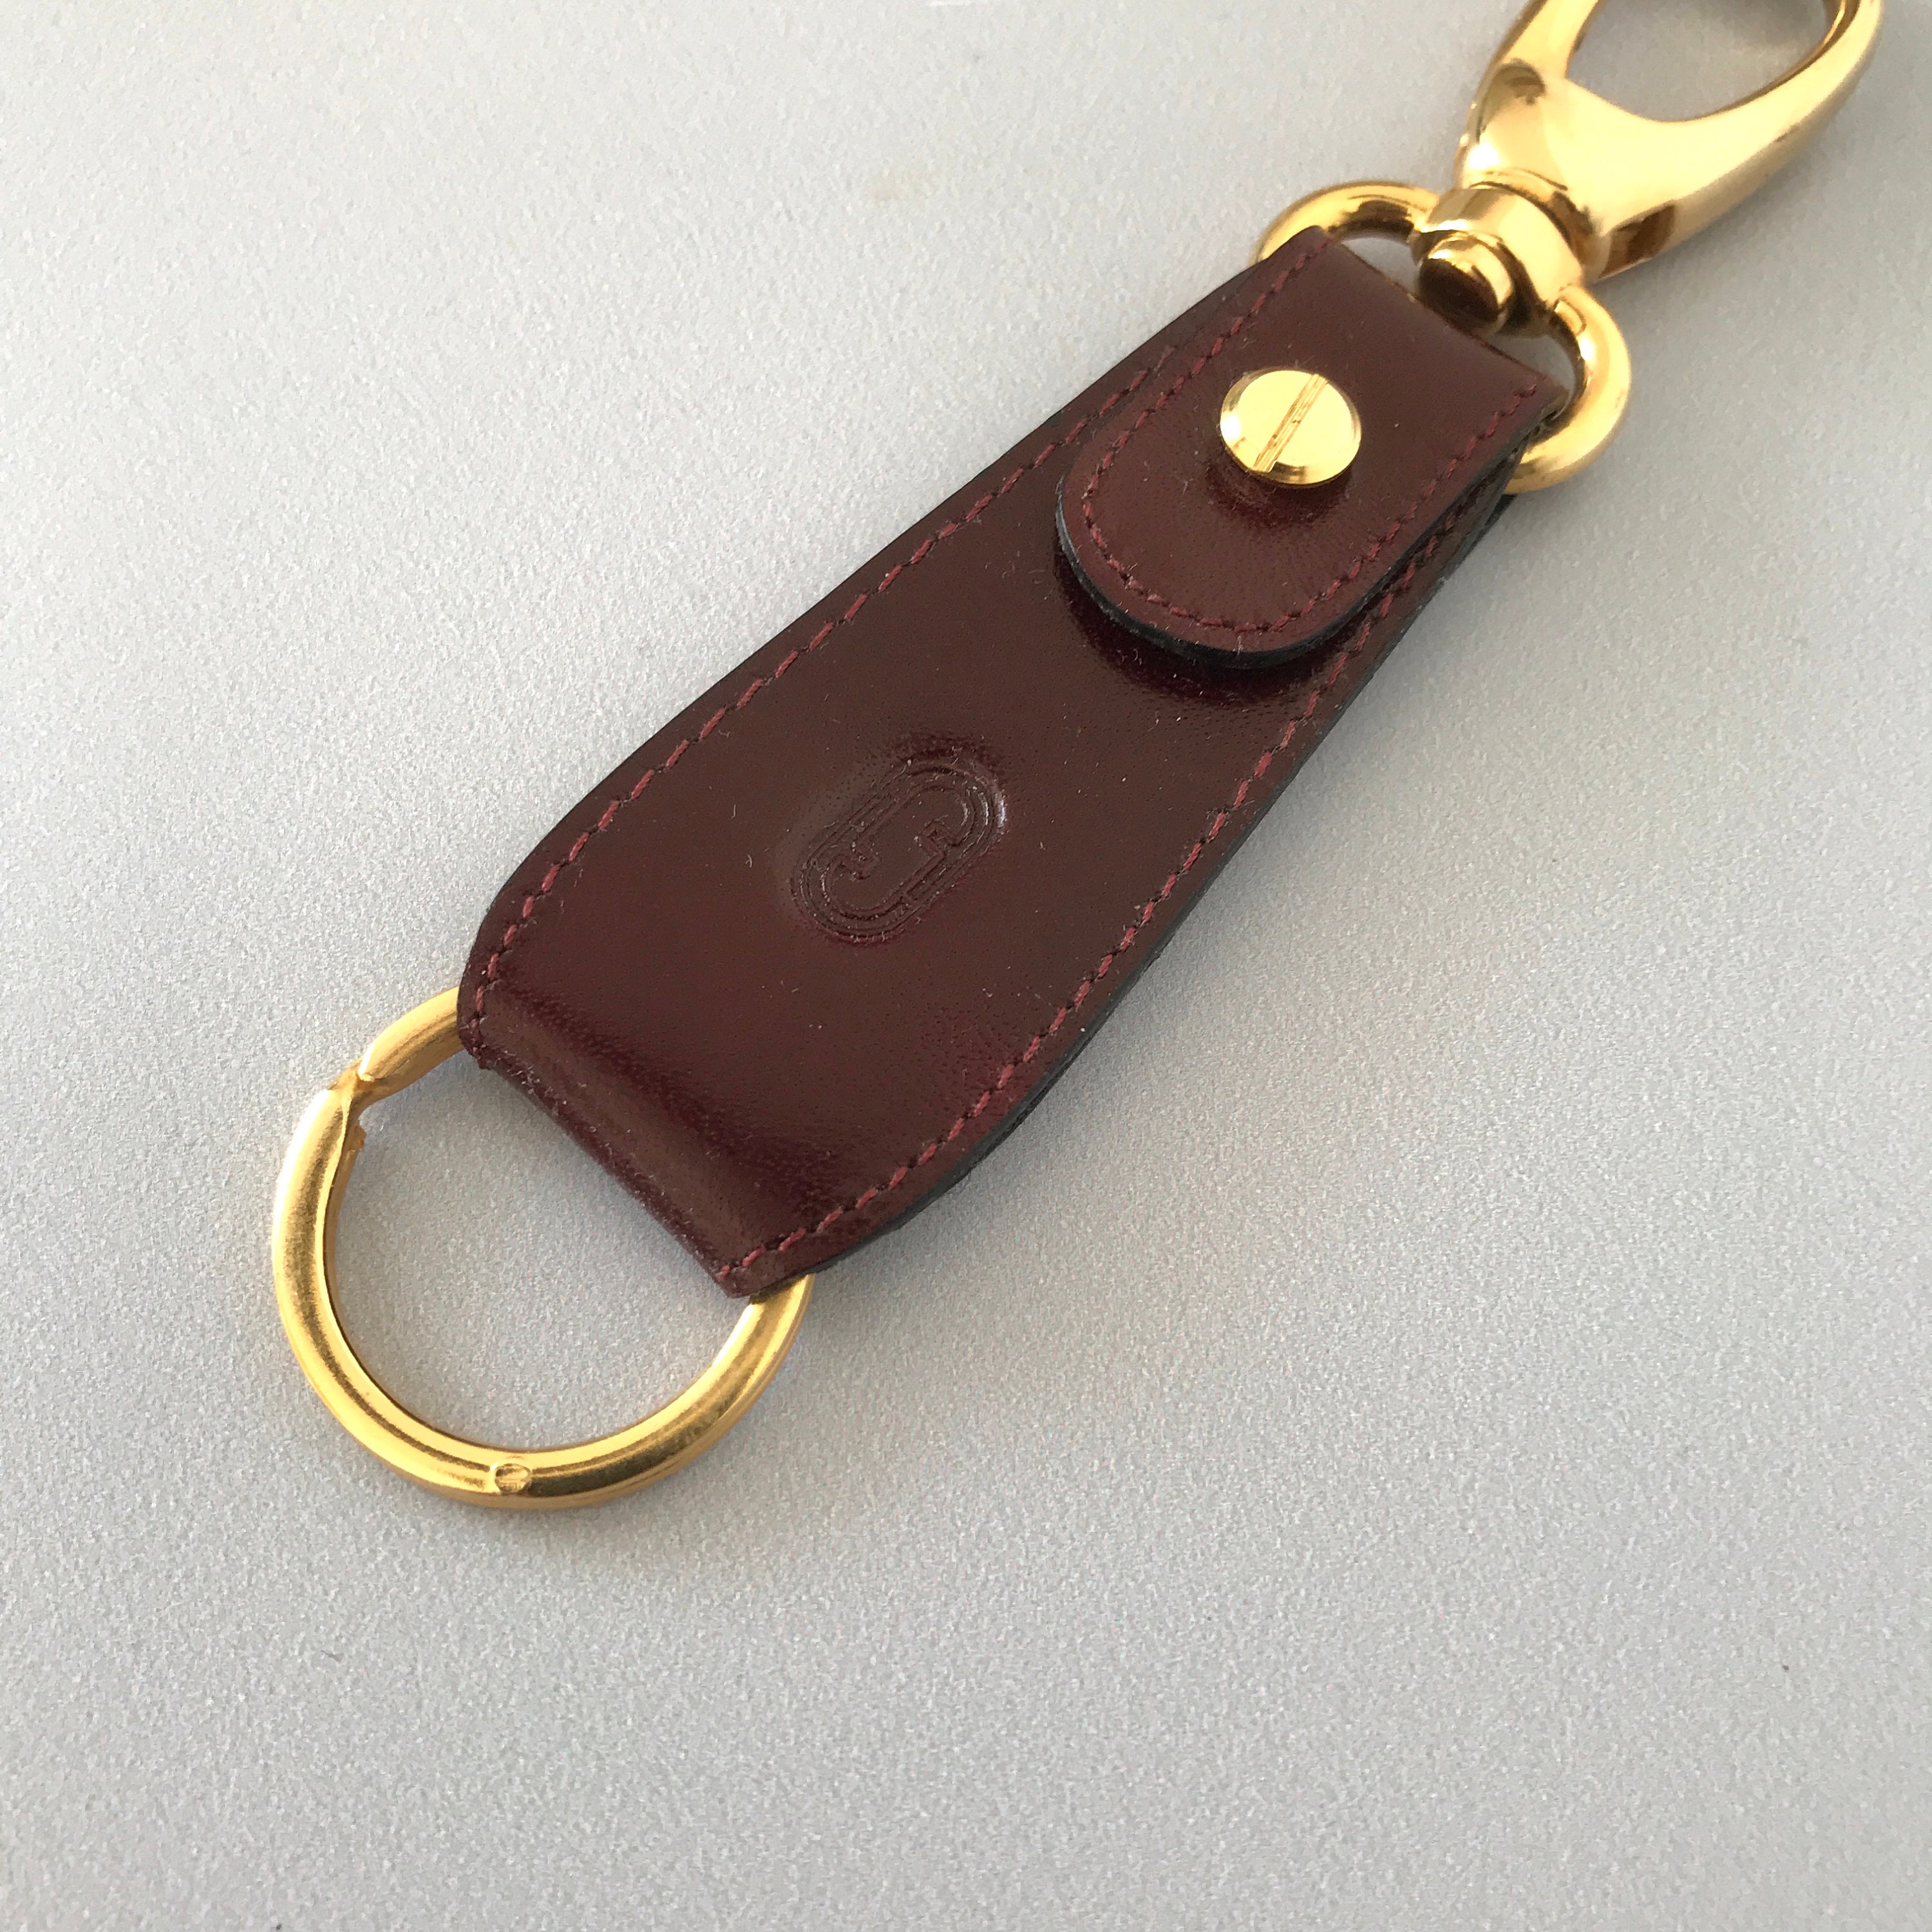 Tebru Key Row Wallet Leather Bag Hardware Key Ring Row Organizer Holder 6  Hooks Clasp Clip, Keyring, DIY Key Holders 